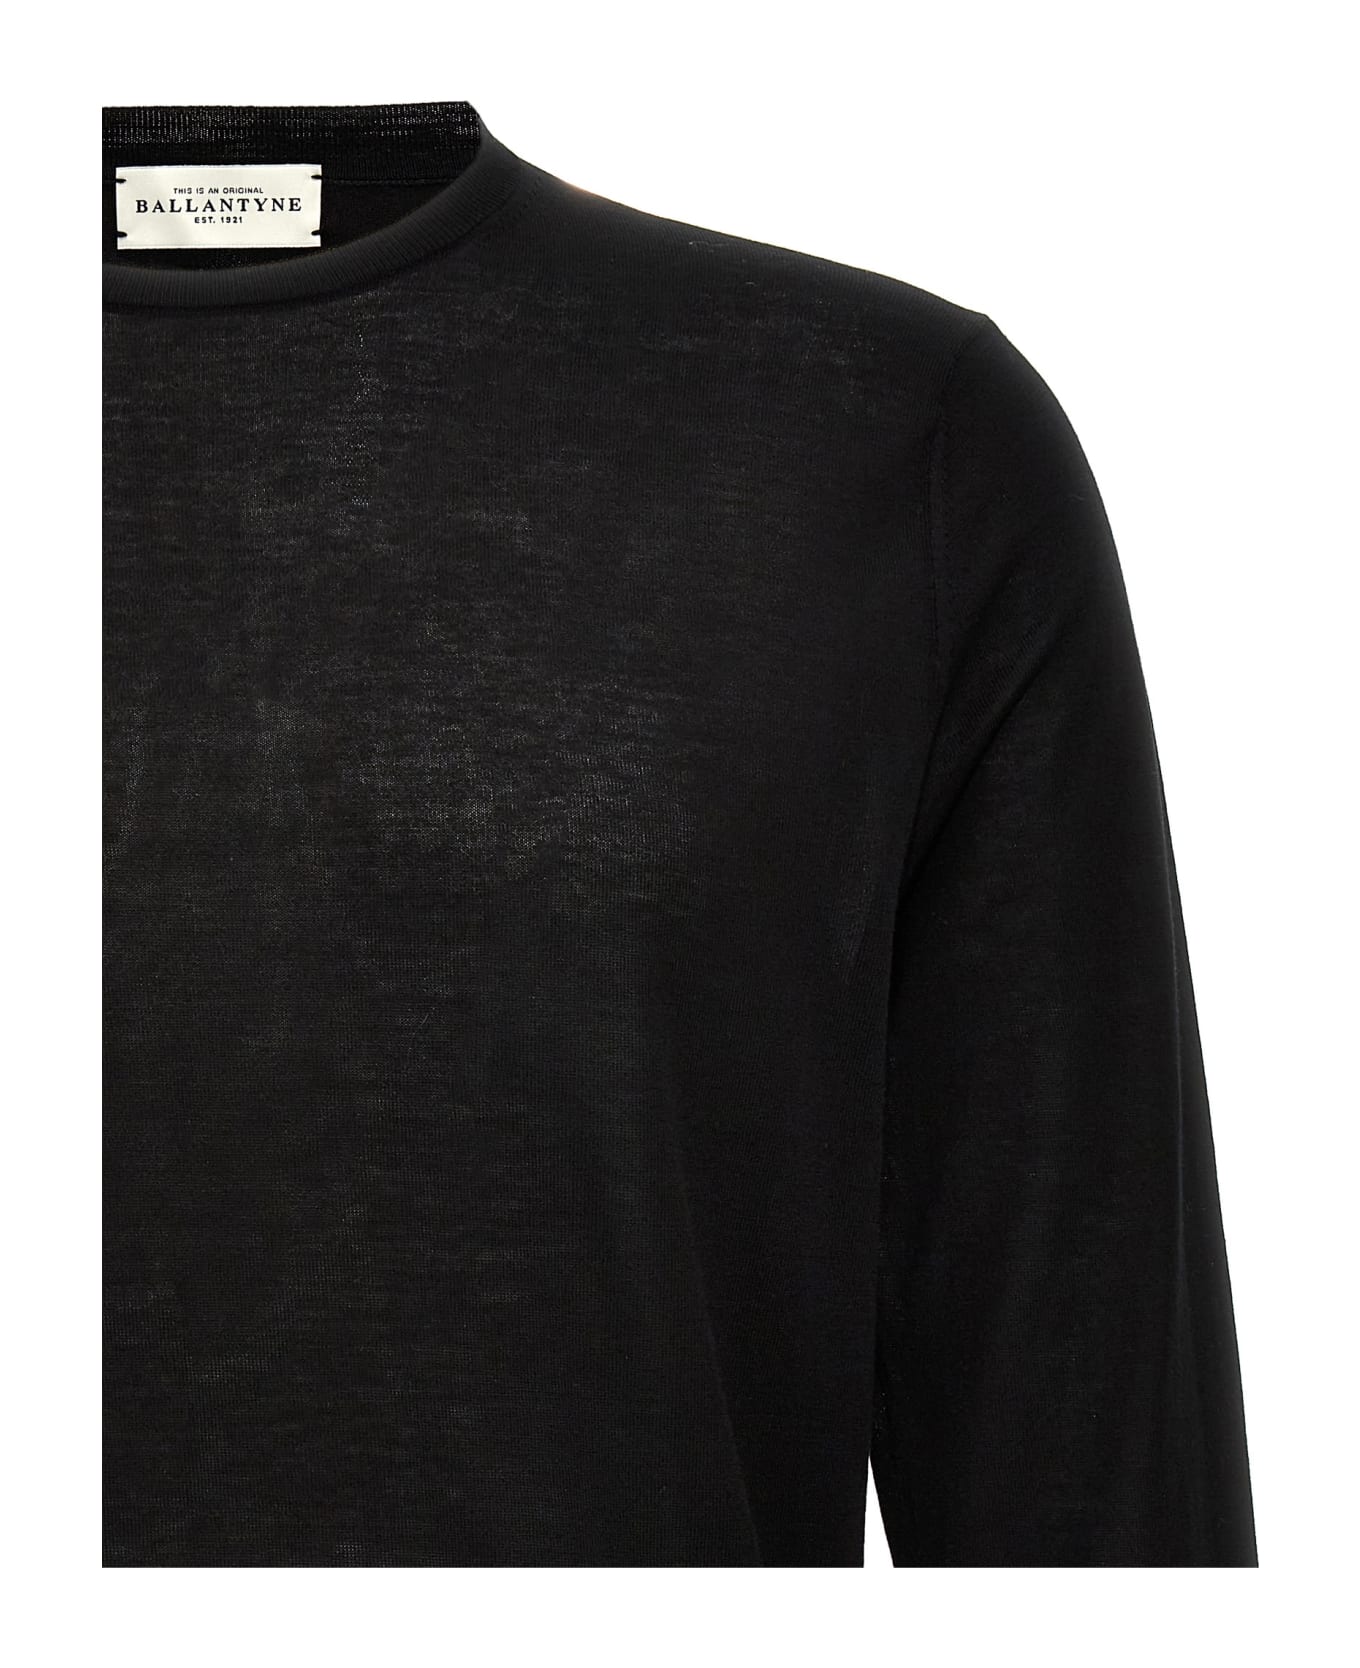 Ballantyne Cotton Sweater - Black  